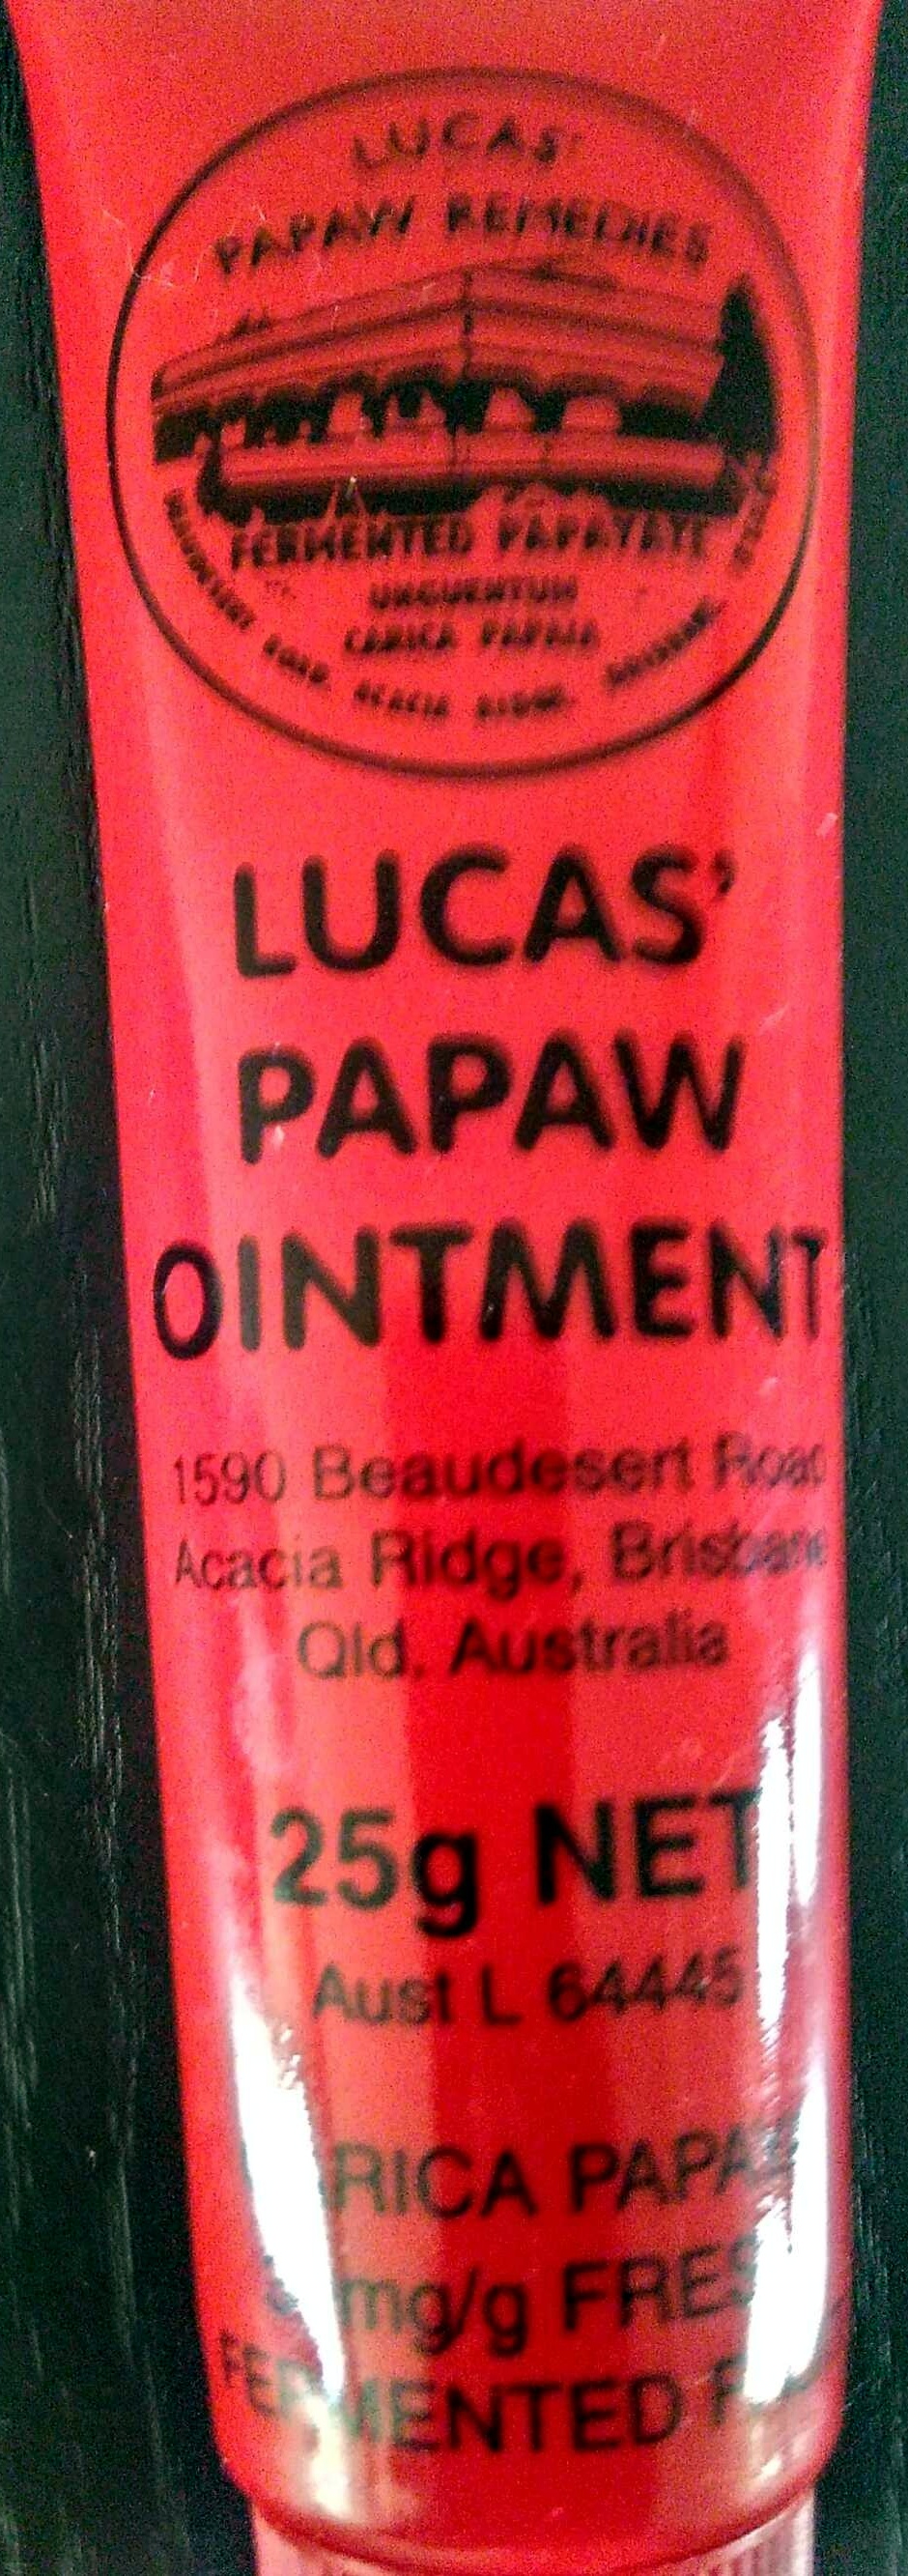 LUCAS' PAPAW OINTMENT - 製品 - en